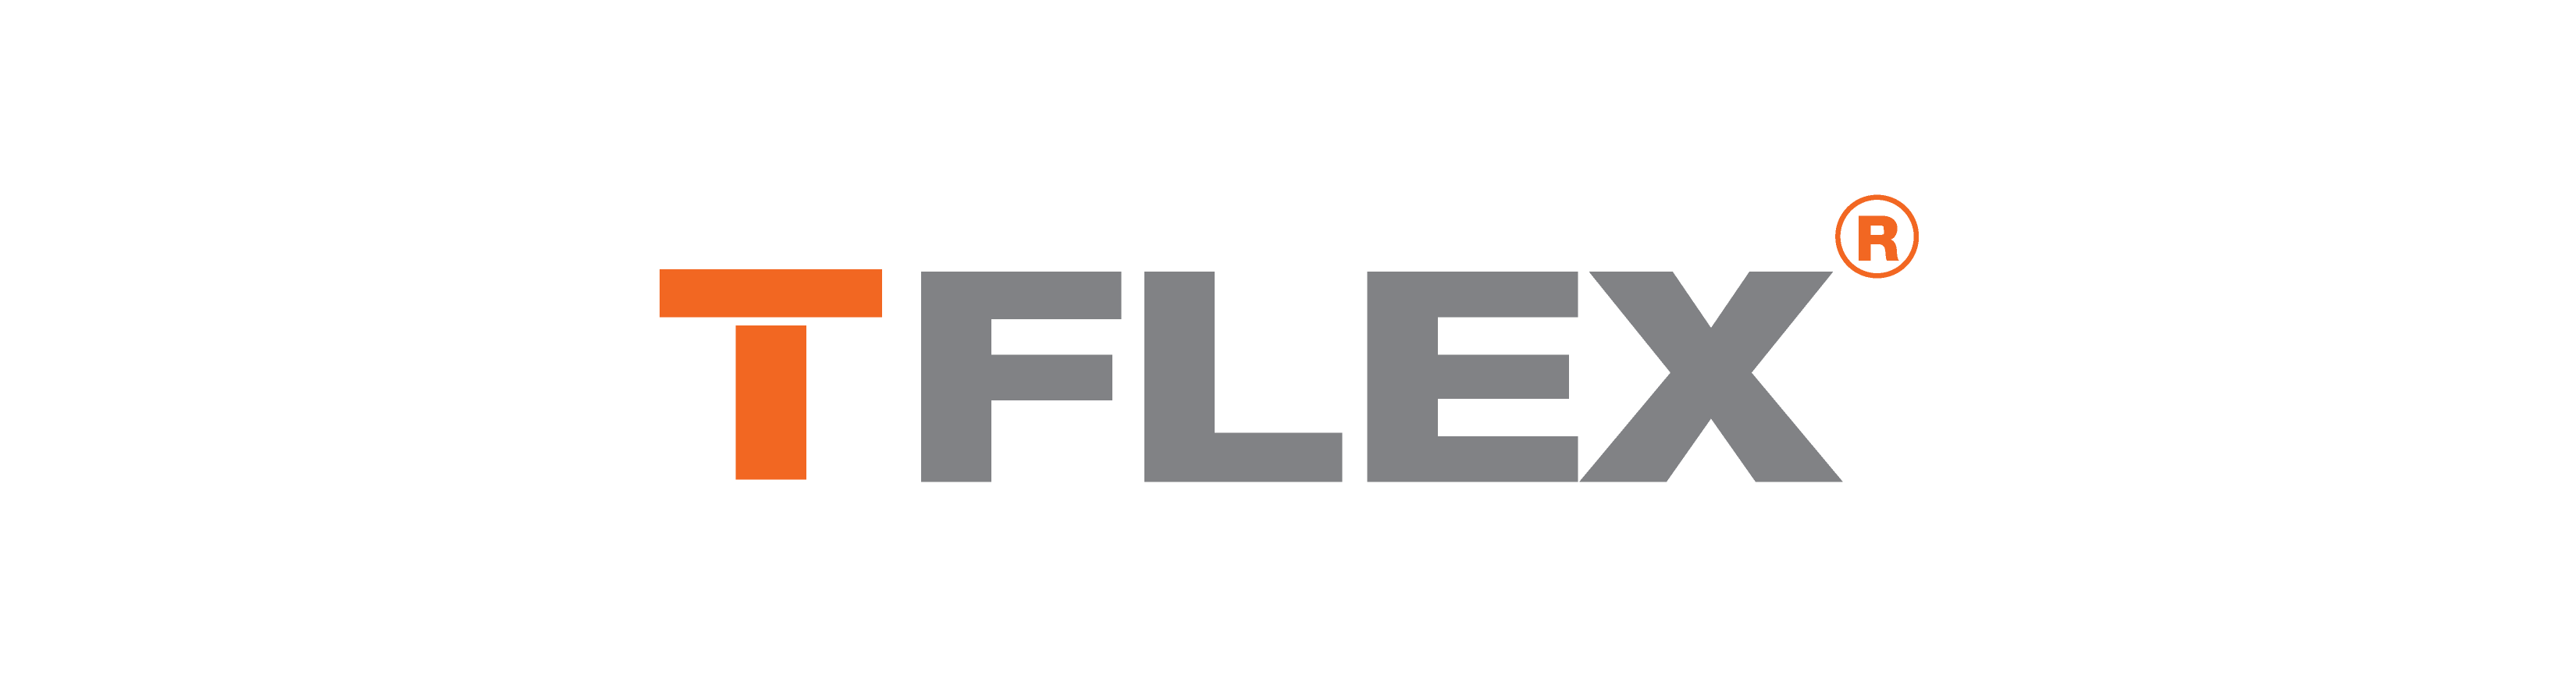 TFLEX-logo-trademarklı